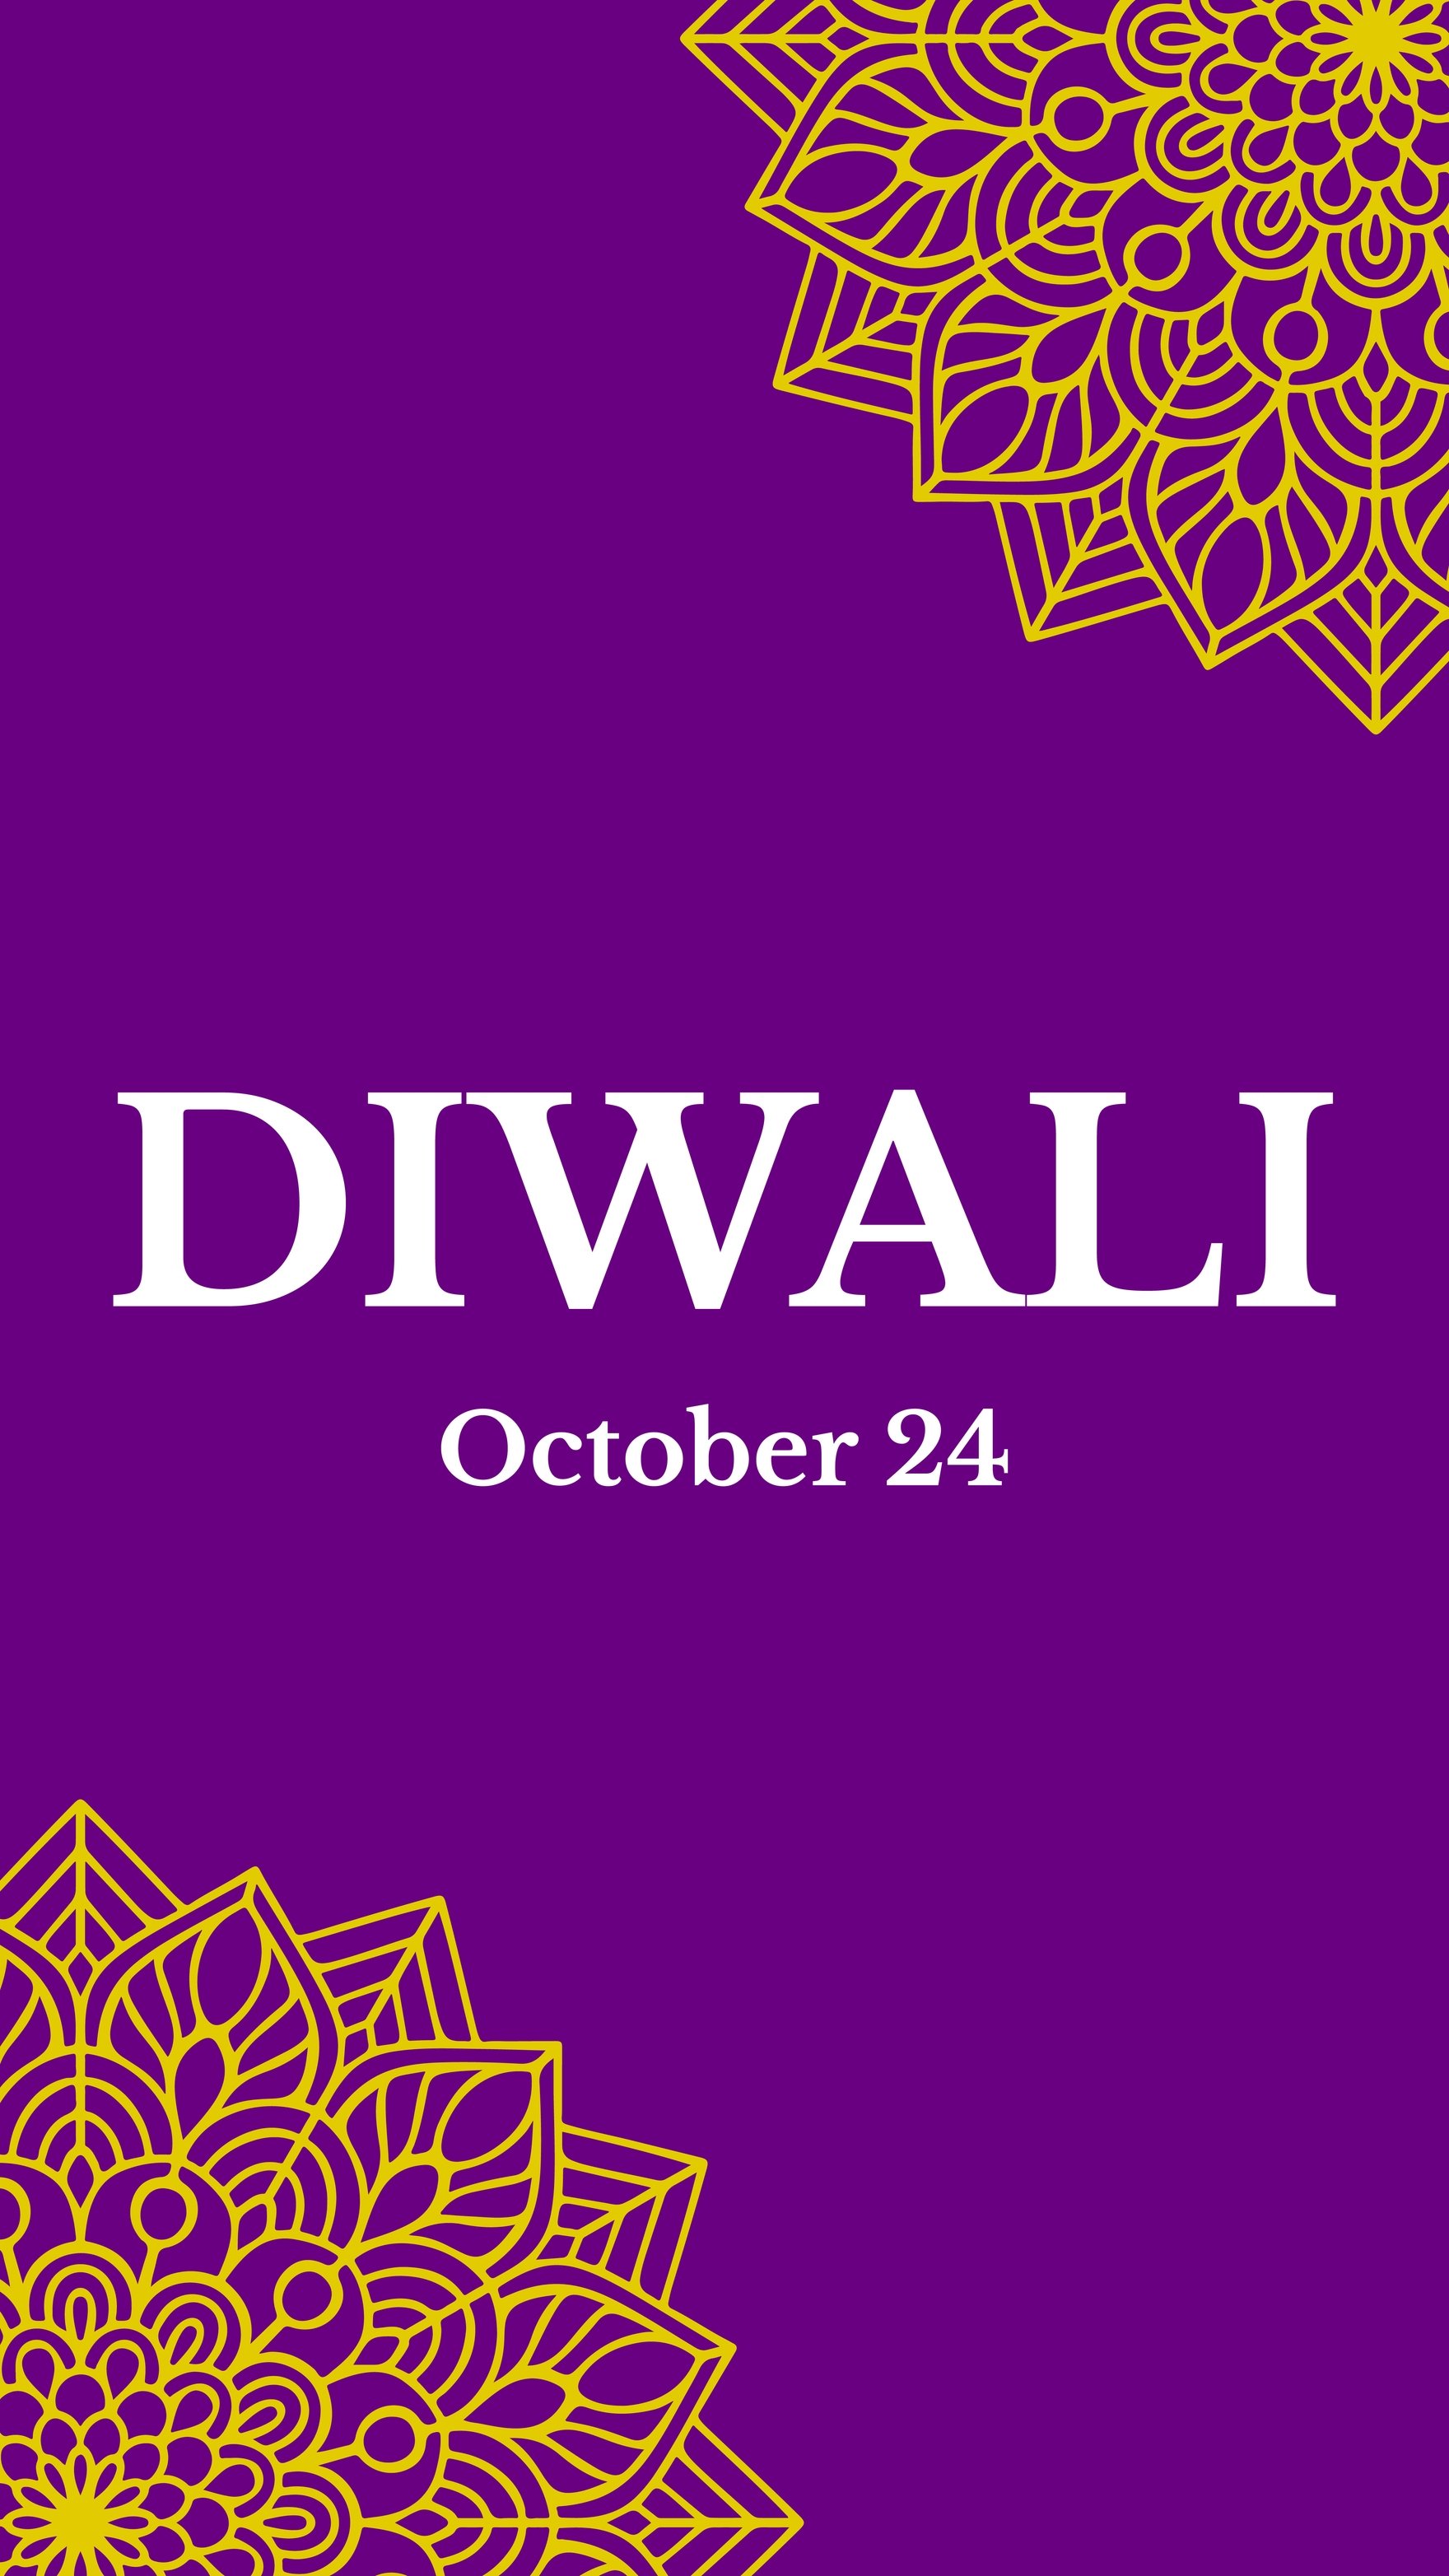 Free Diwali Instagram Story in Illustrator, PSD, EPS, SVG, JPG, PNG